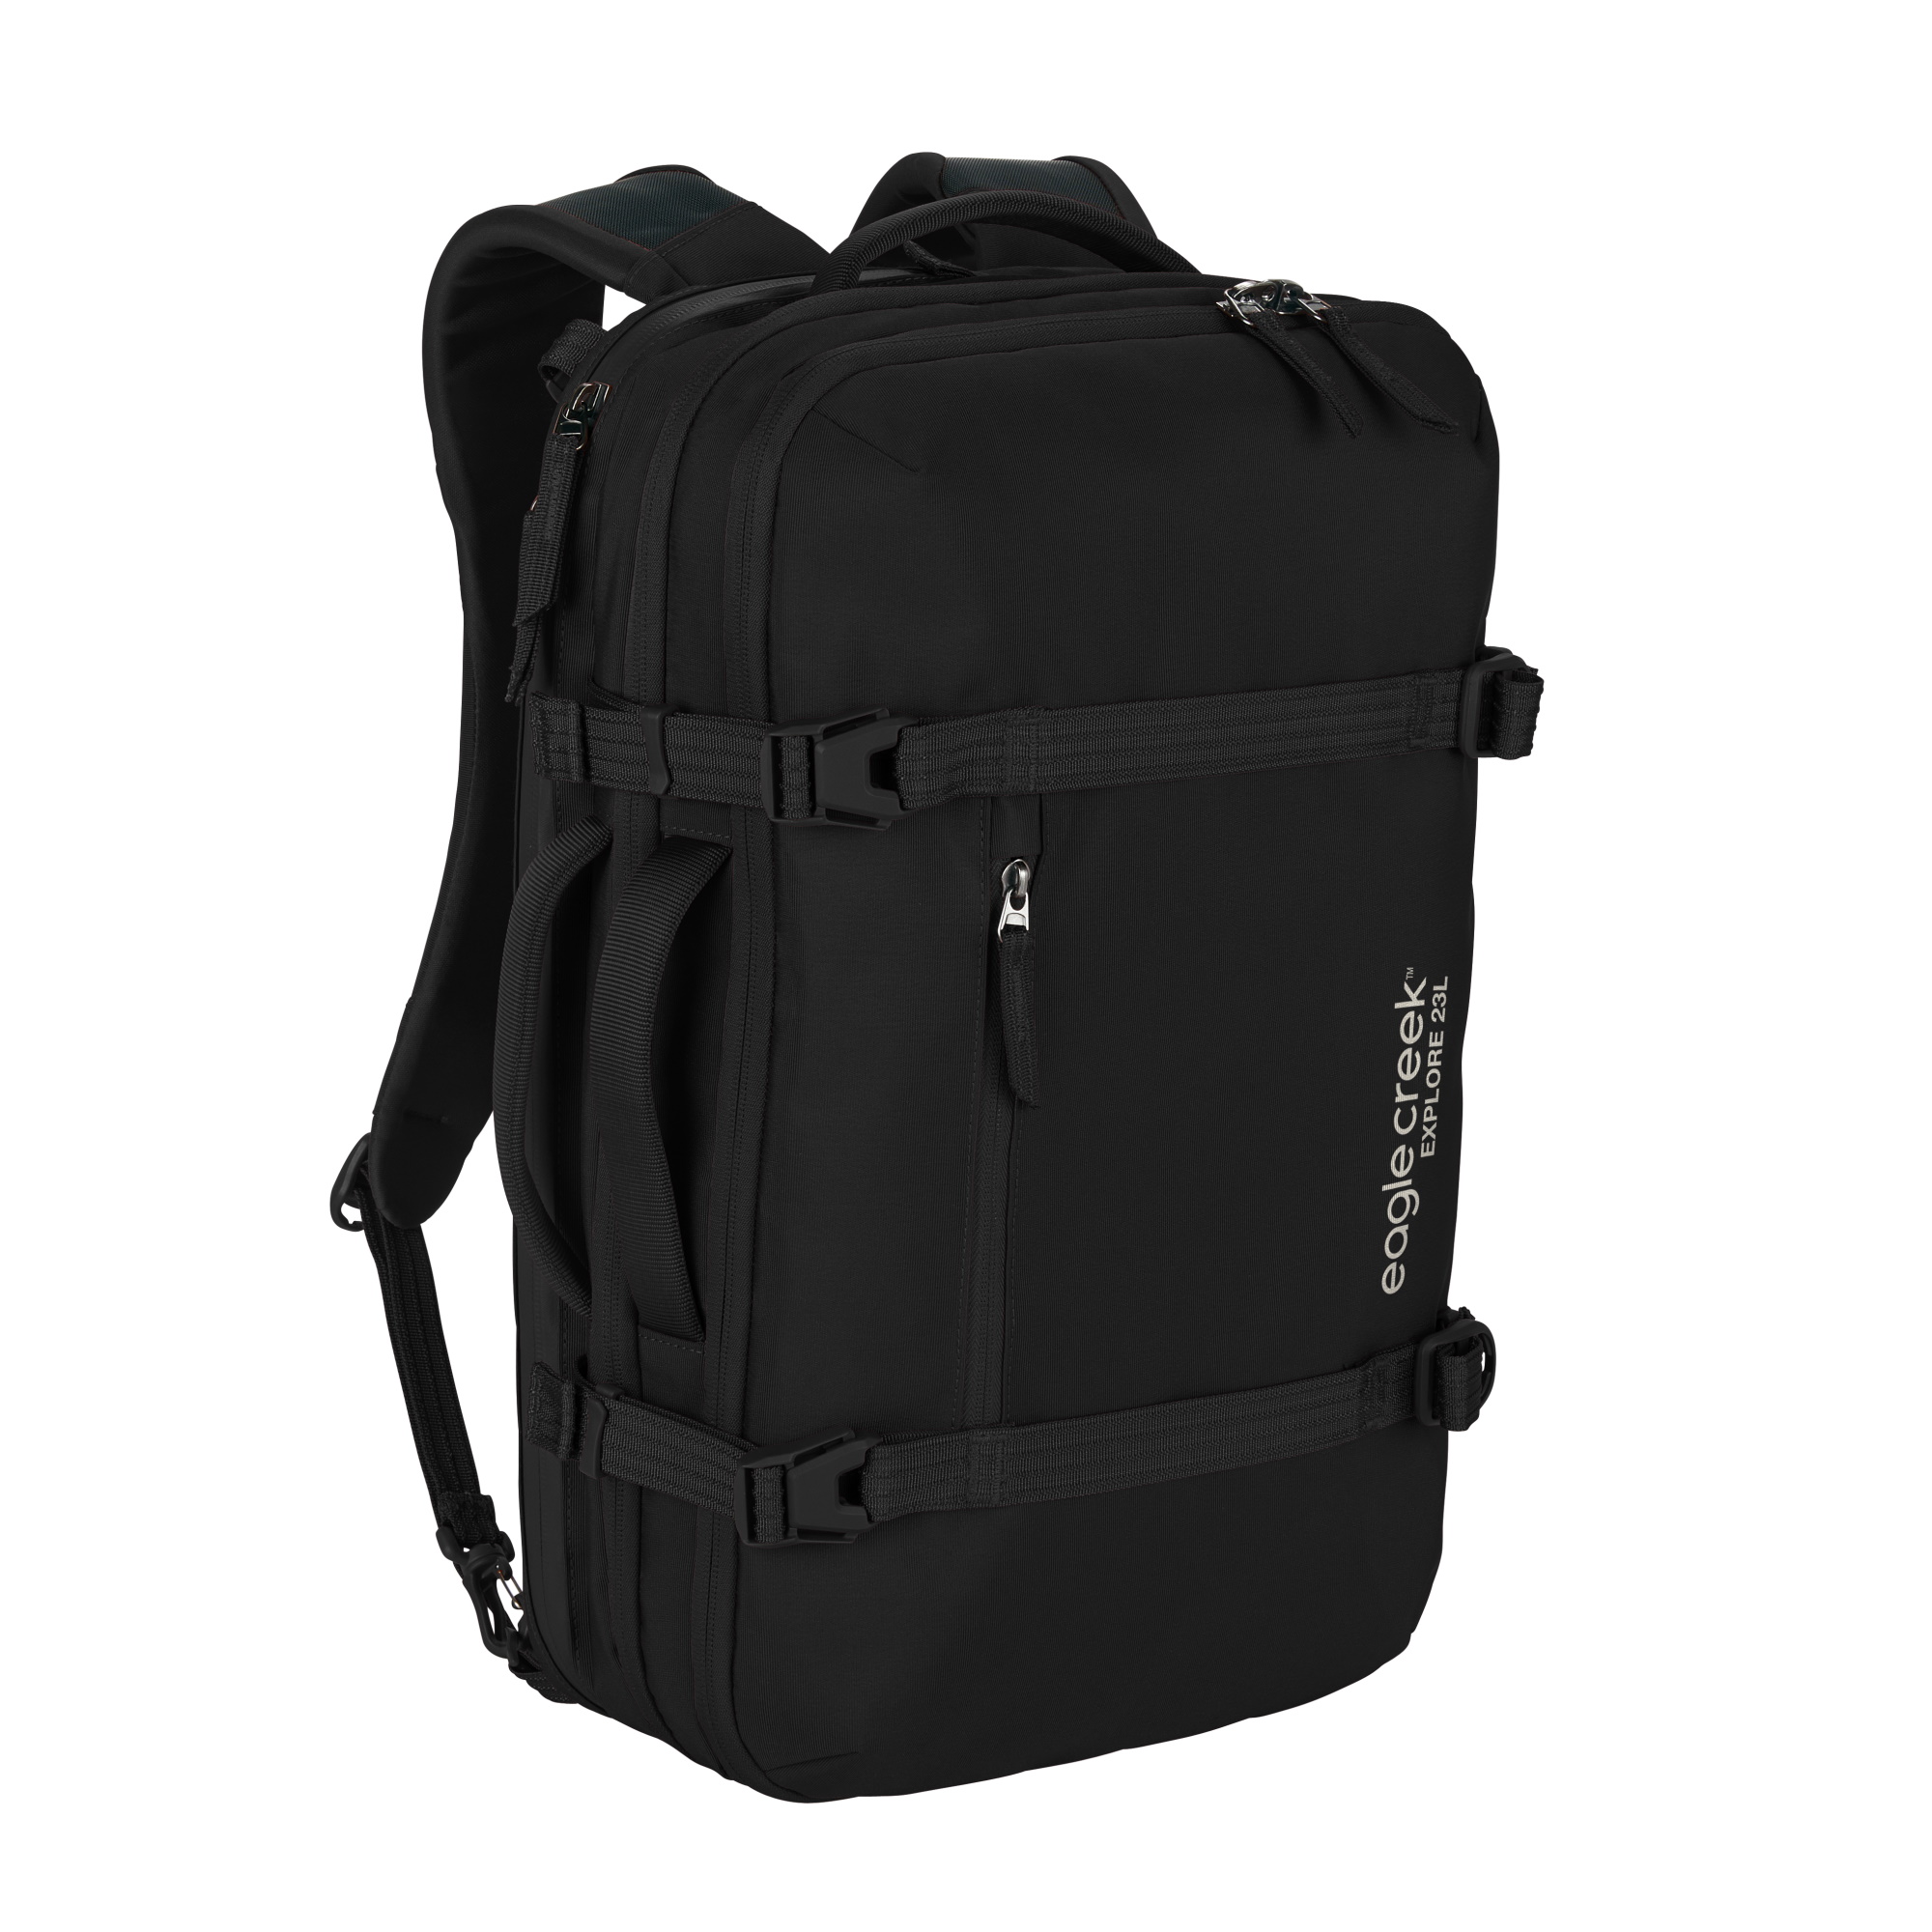 Eagle Creek Travel Gear backpack Double Bag Black | eBay